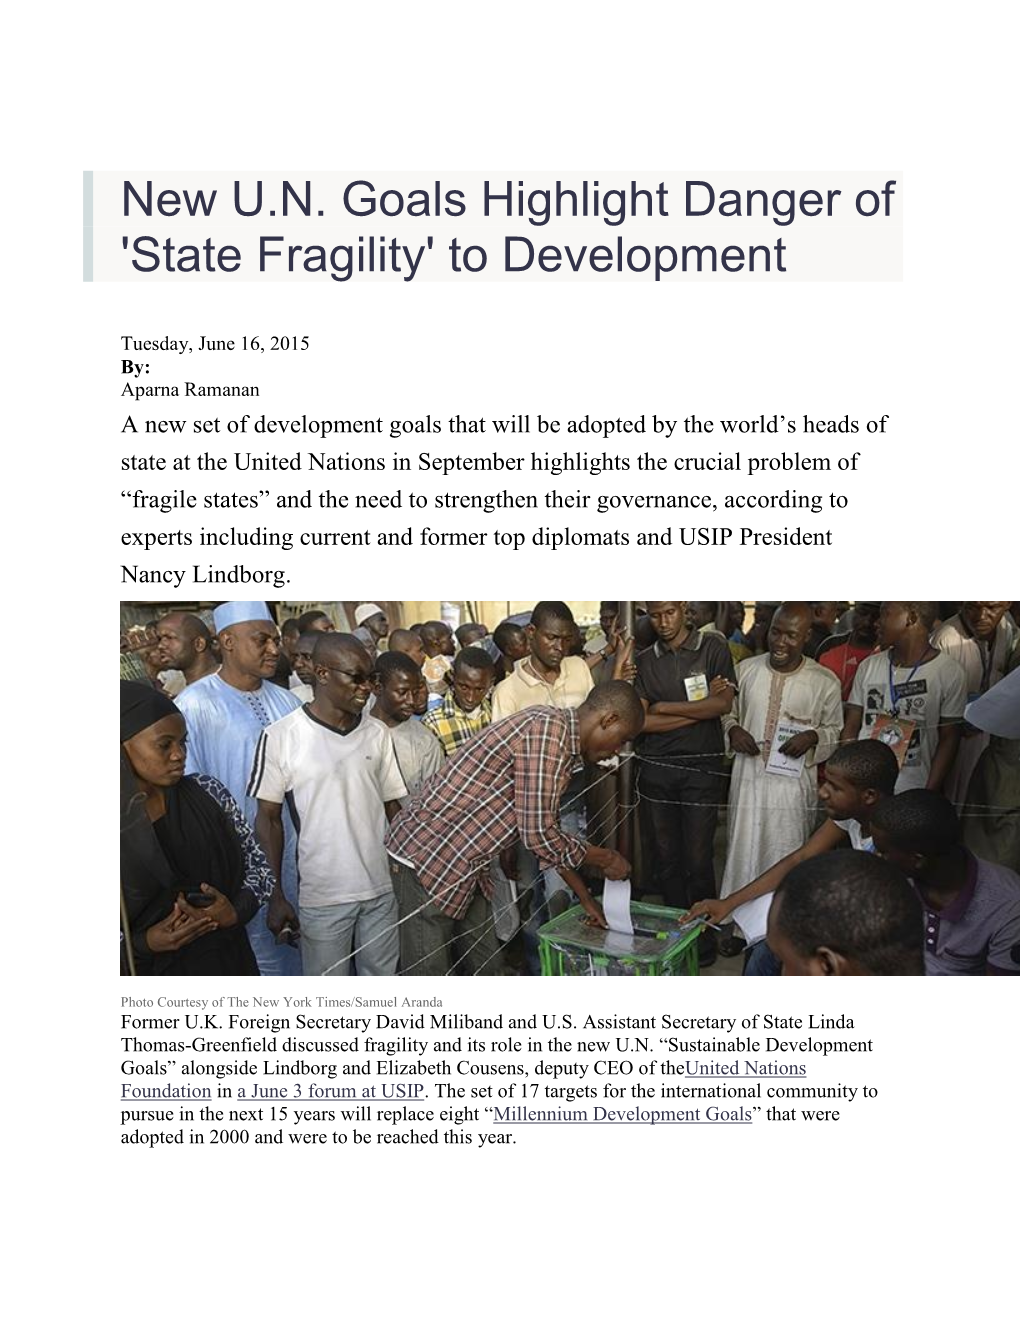 New U.N. Goals Highlight Danger of 'State Fragility' to Development